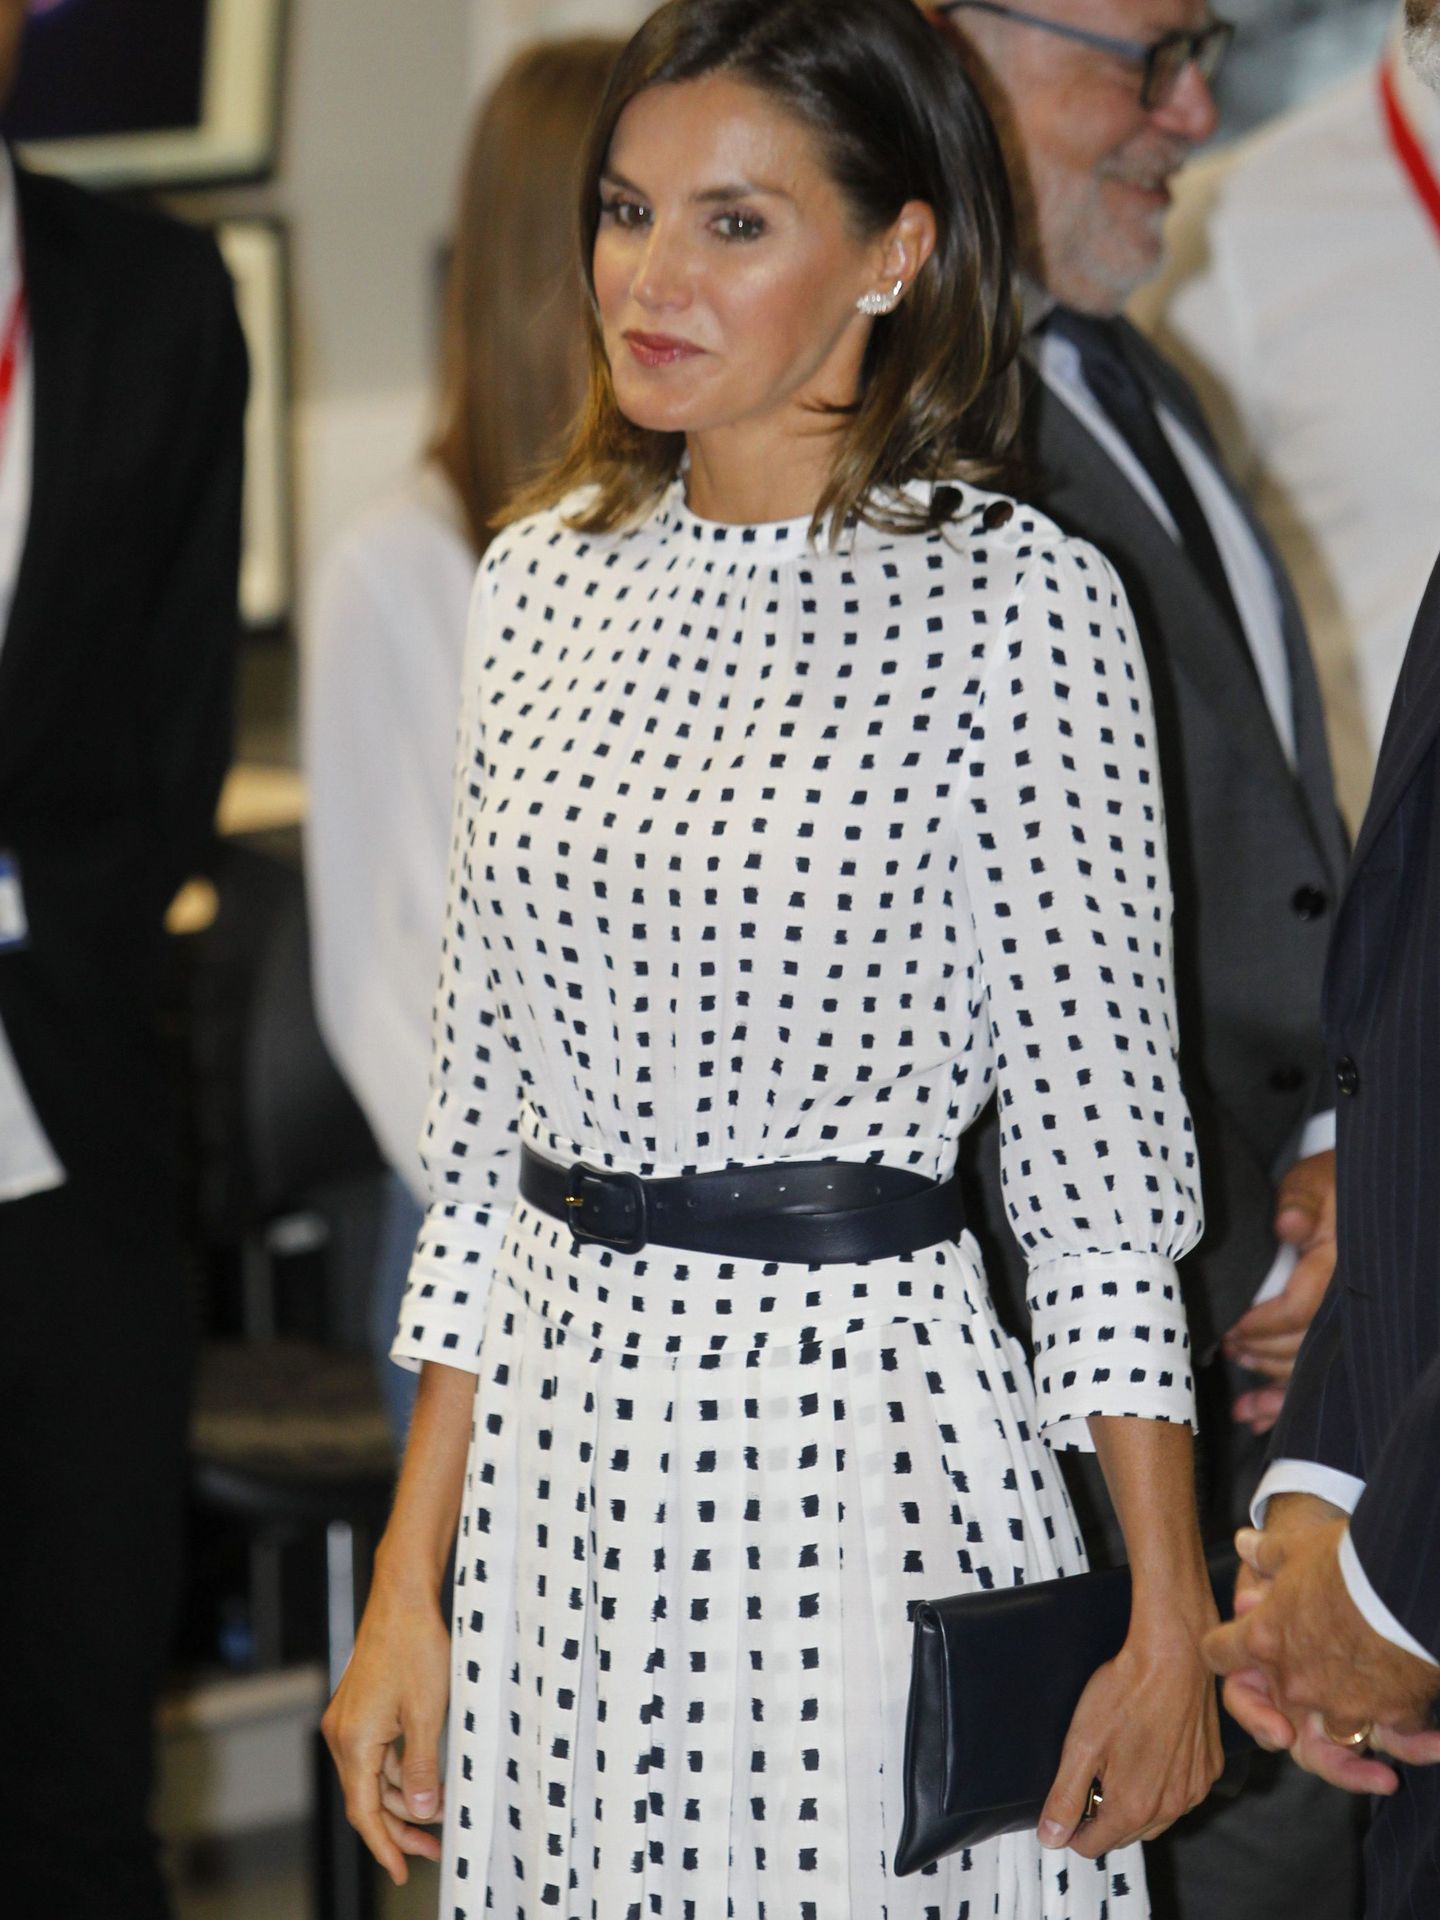 La Reina Letizia y su vestido de Massimo Dutti en Salamanca. (Cordon Press)